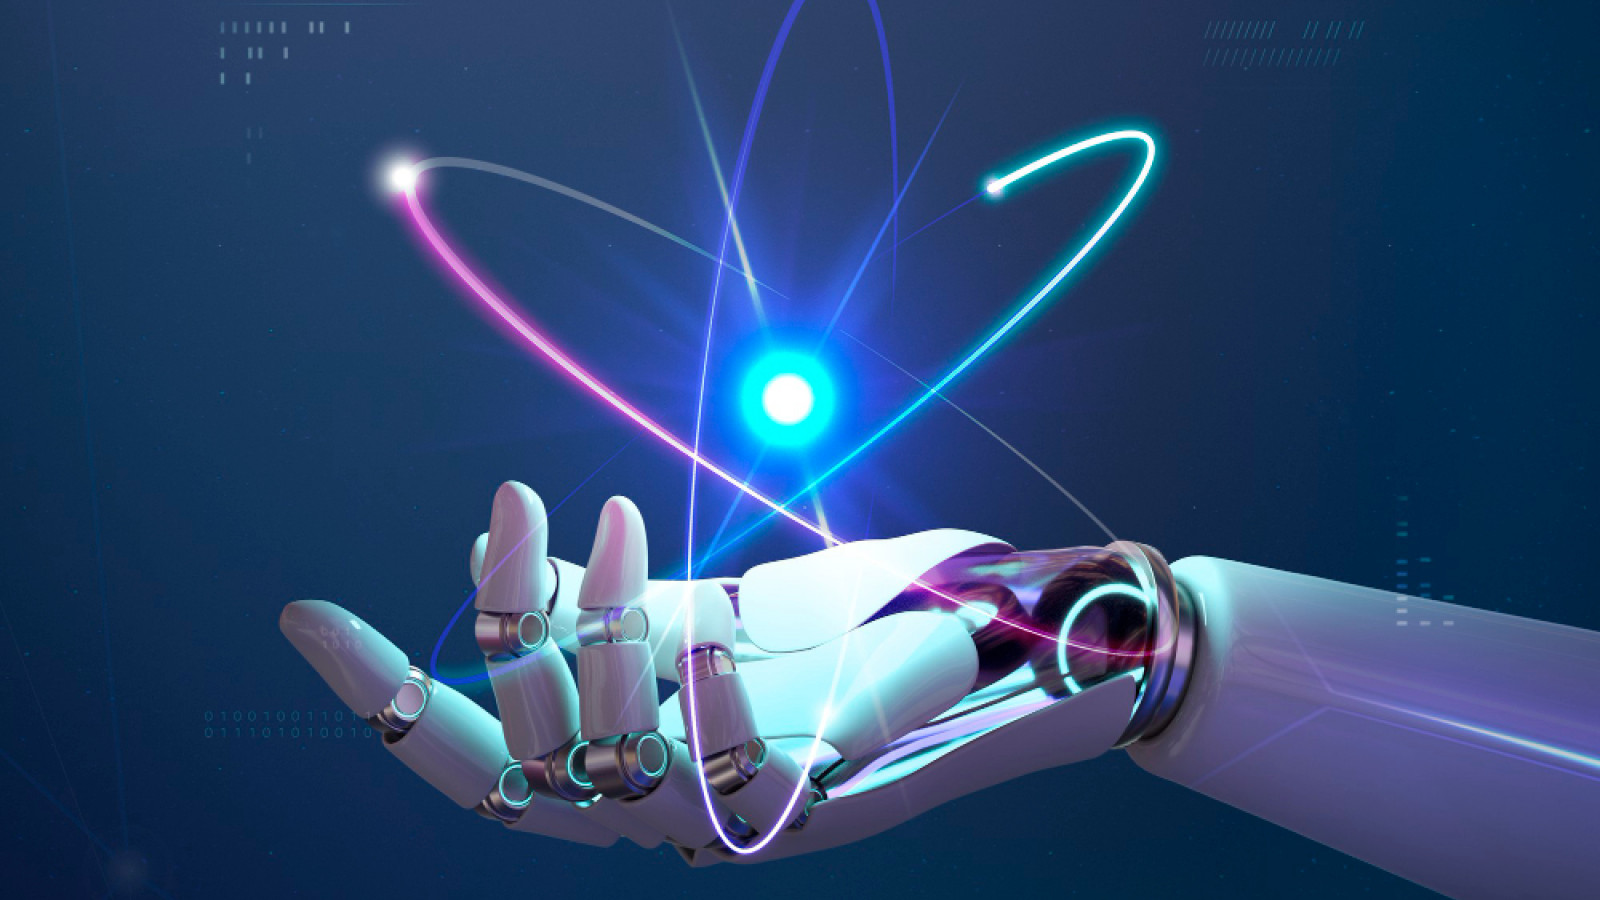 ai-nuclear-energy-background-future-innovation-disruptive-technology